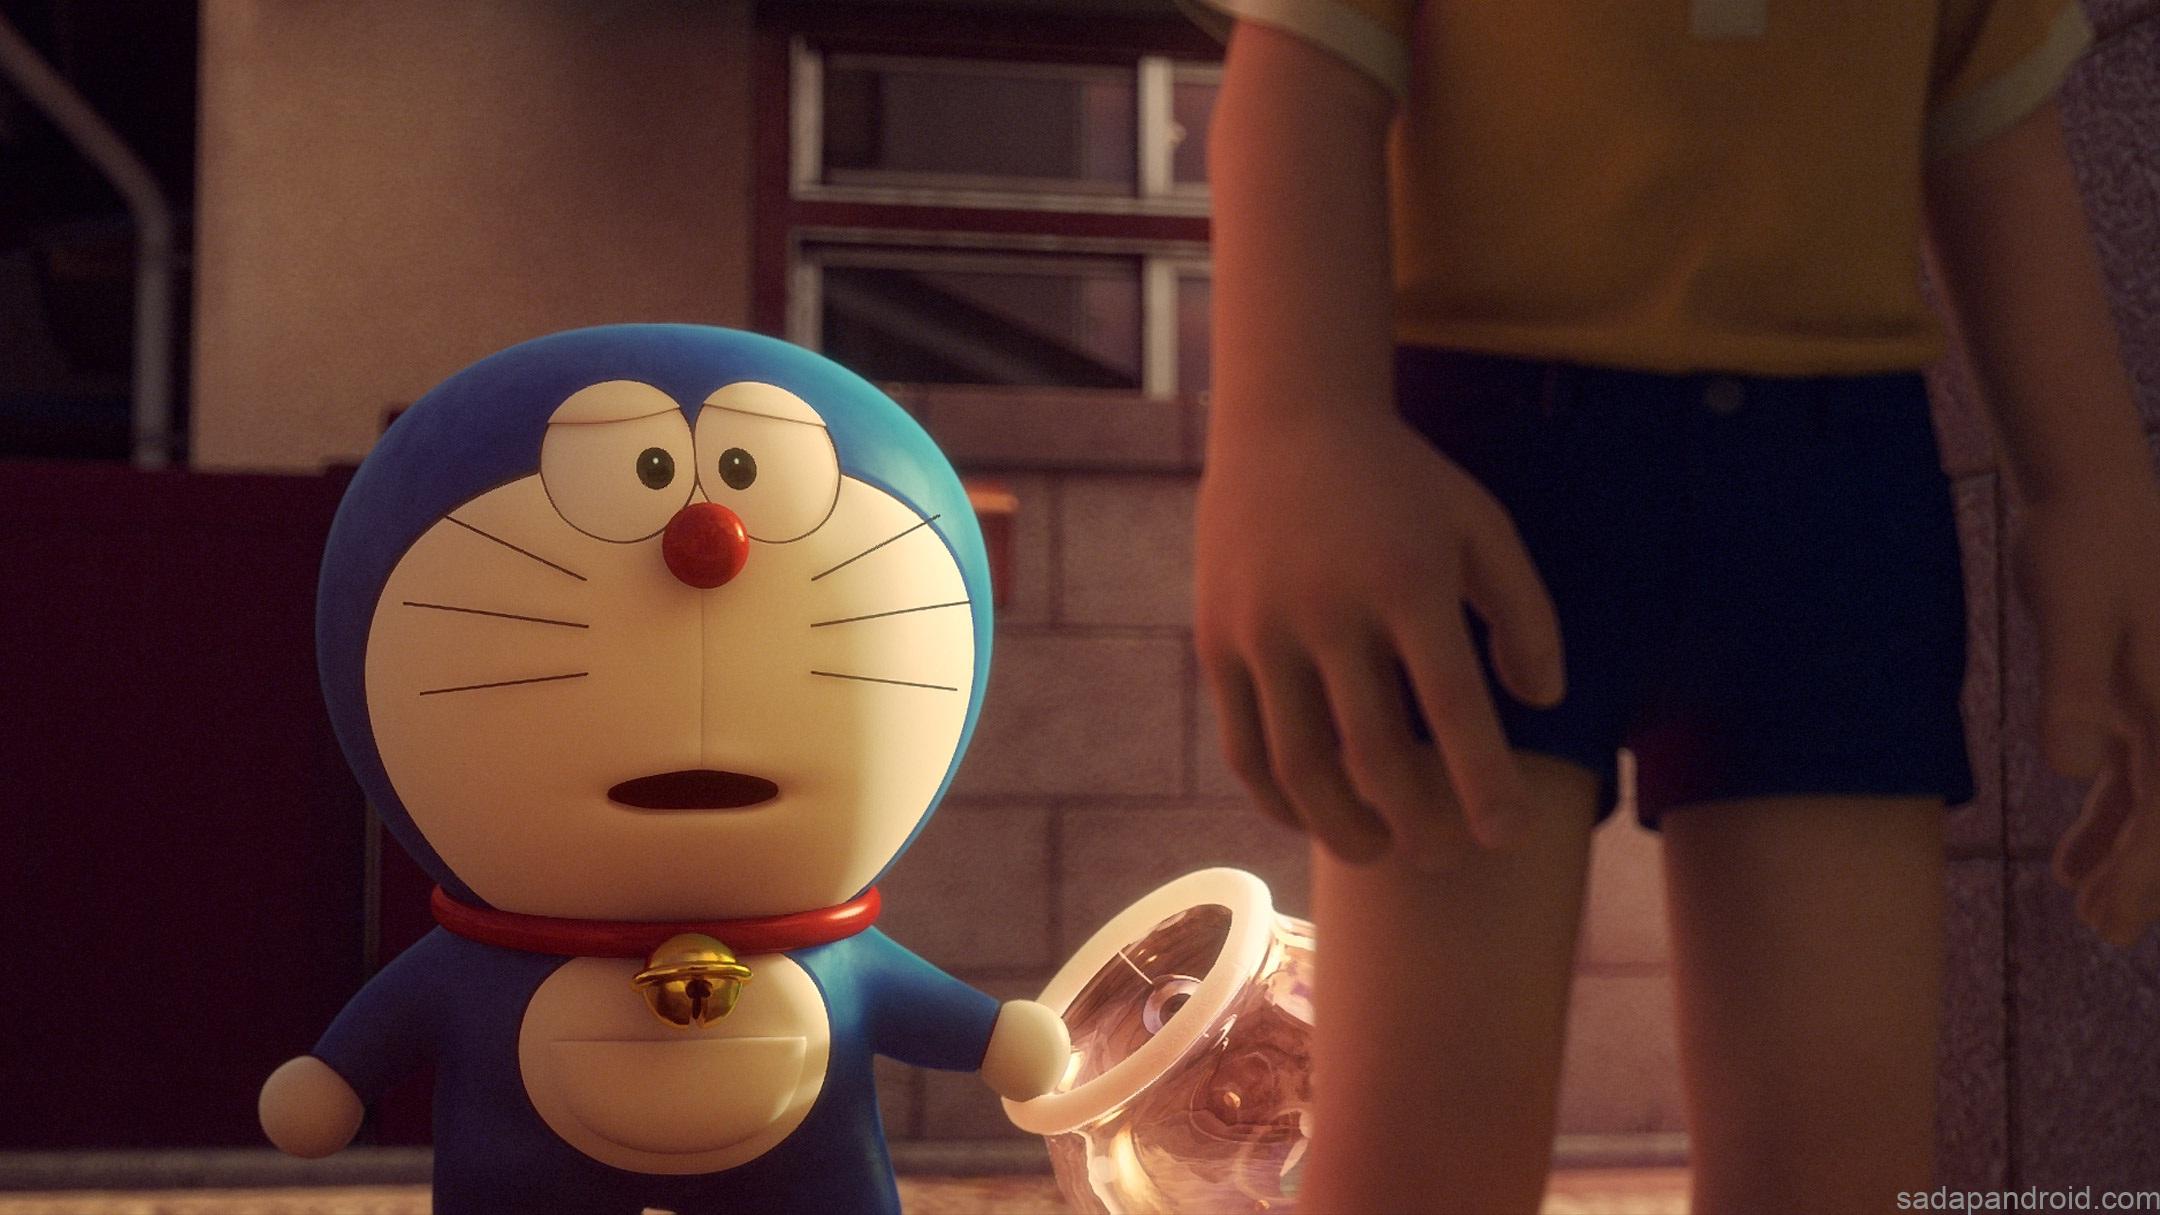 Gambar Kata Kata Galau Doraemon Sobkatakata